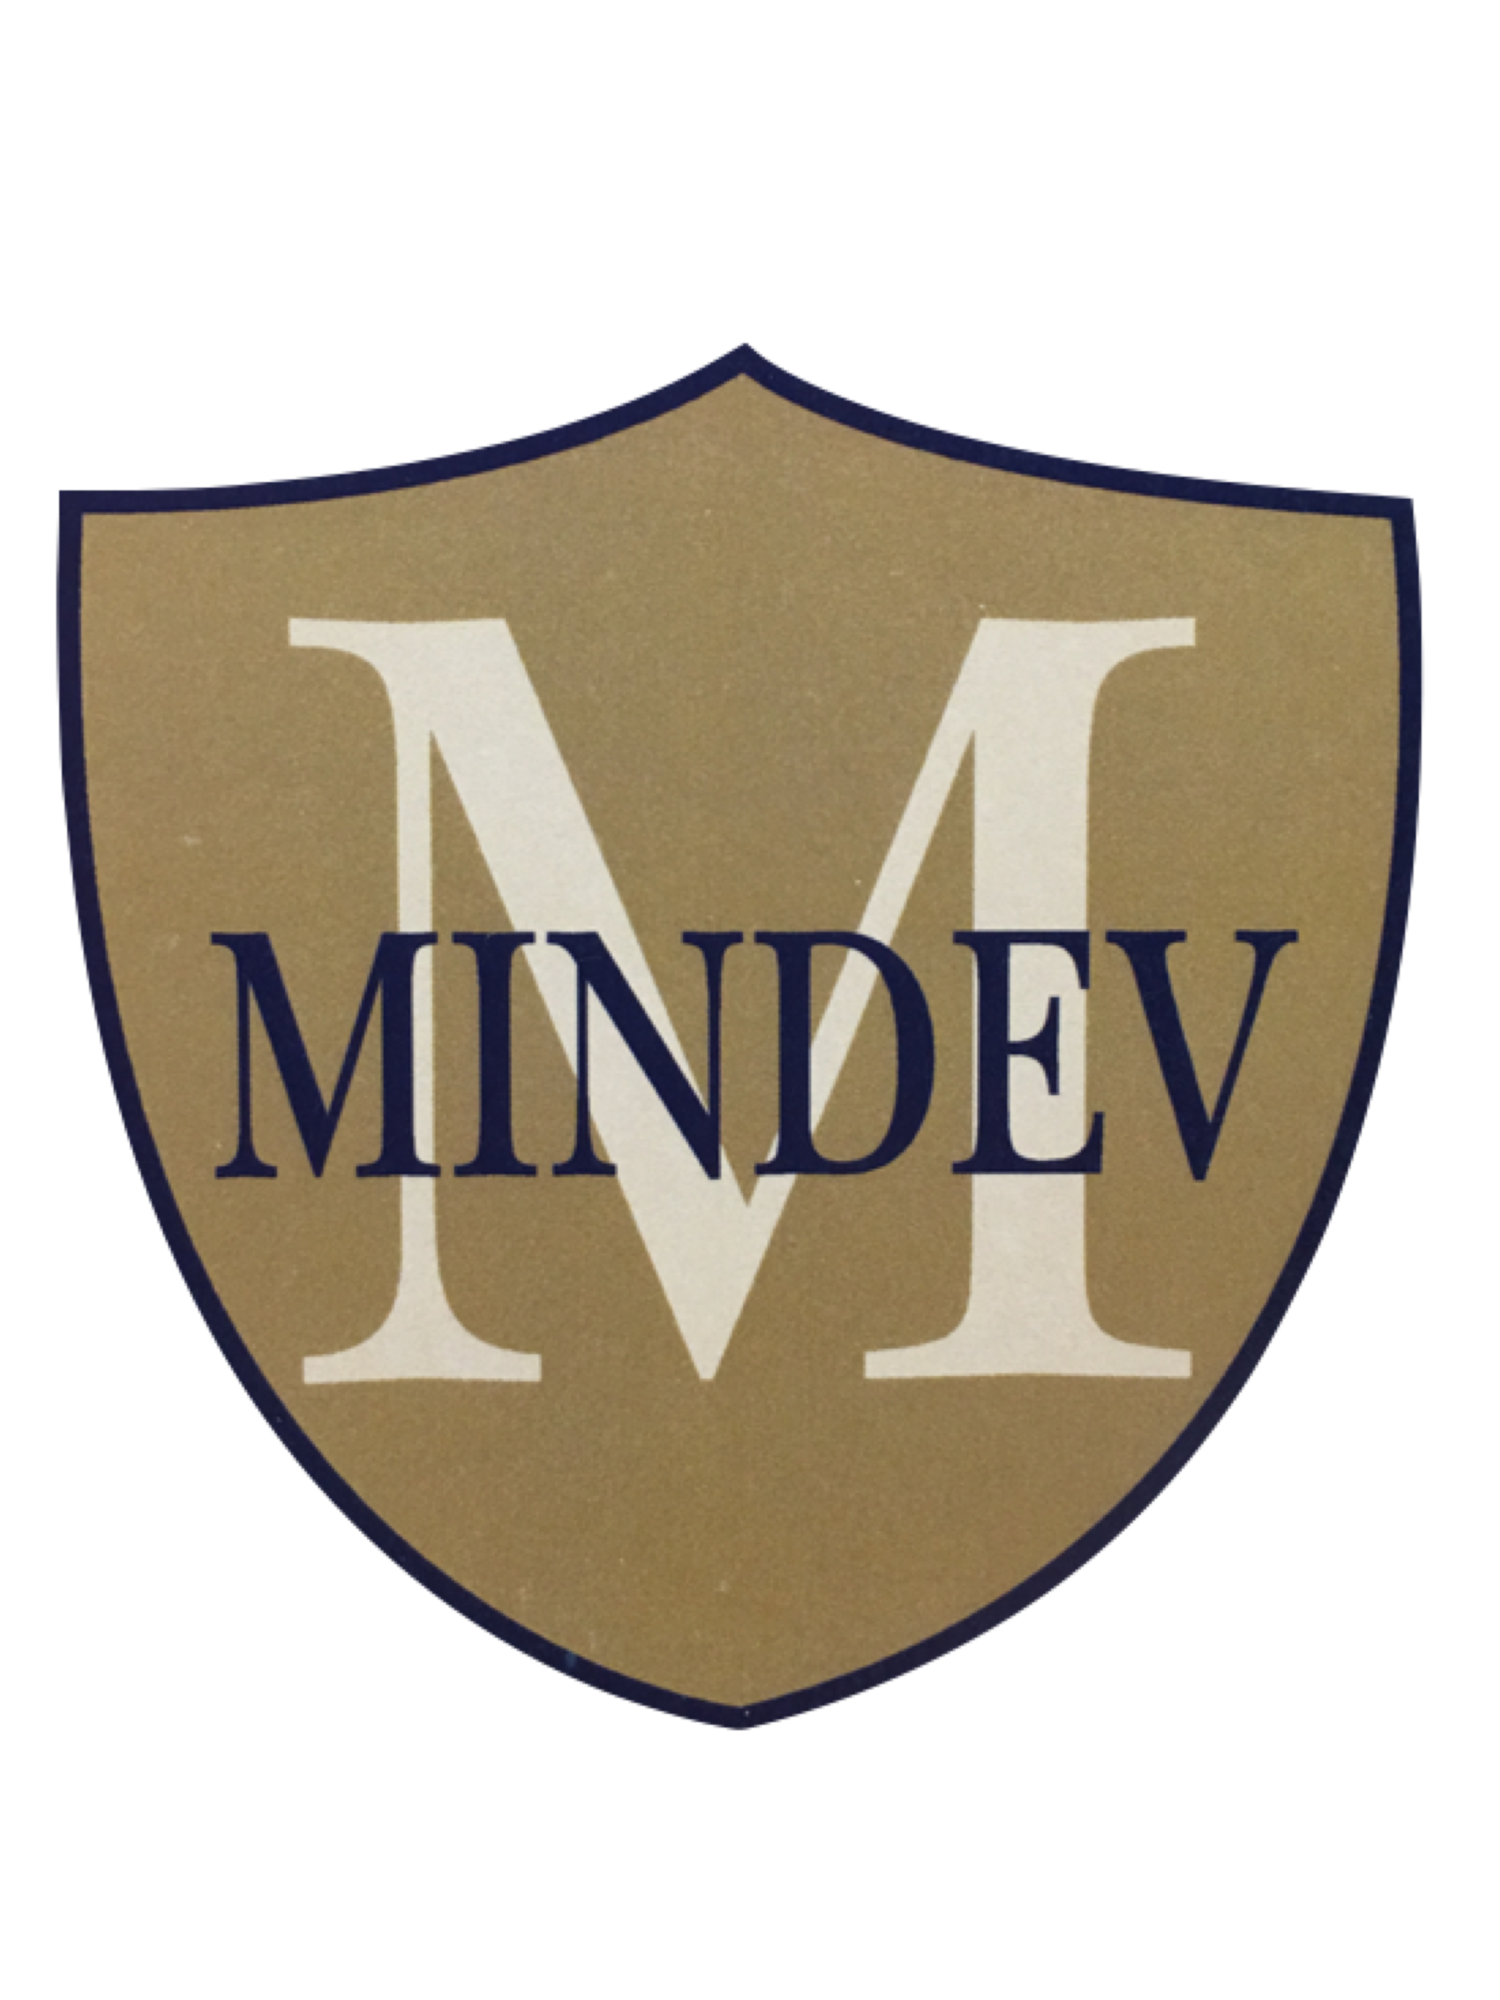 Groupe Mindev